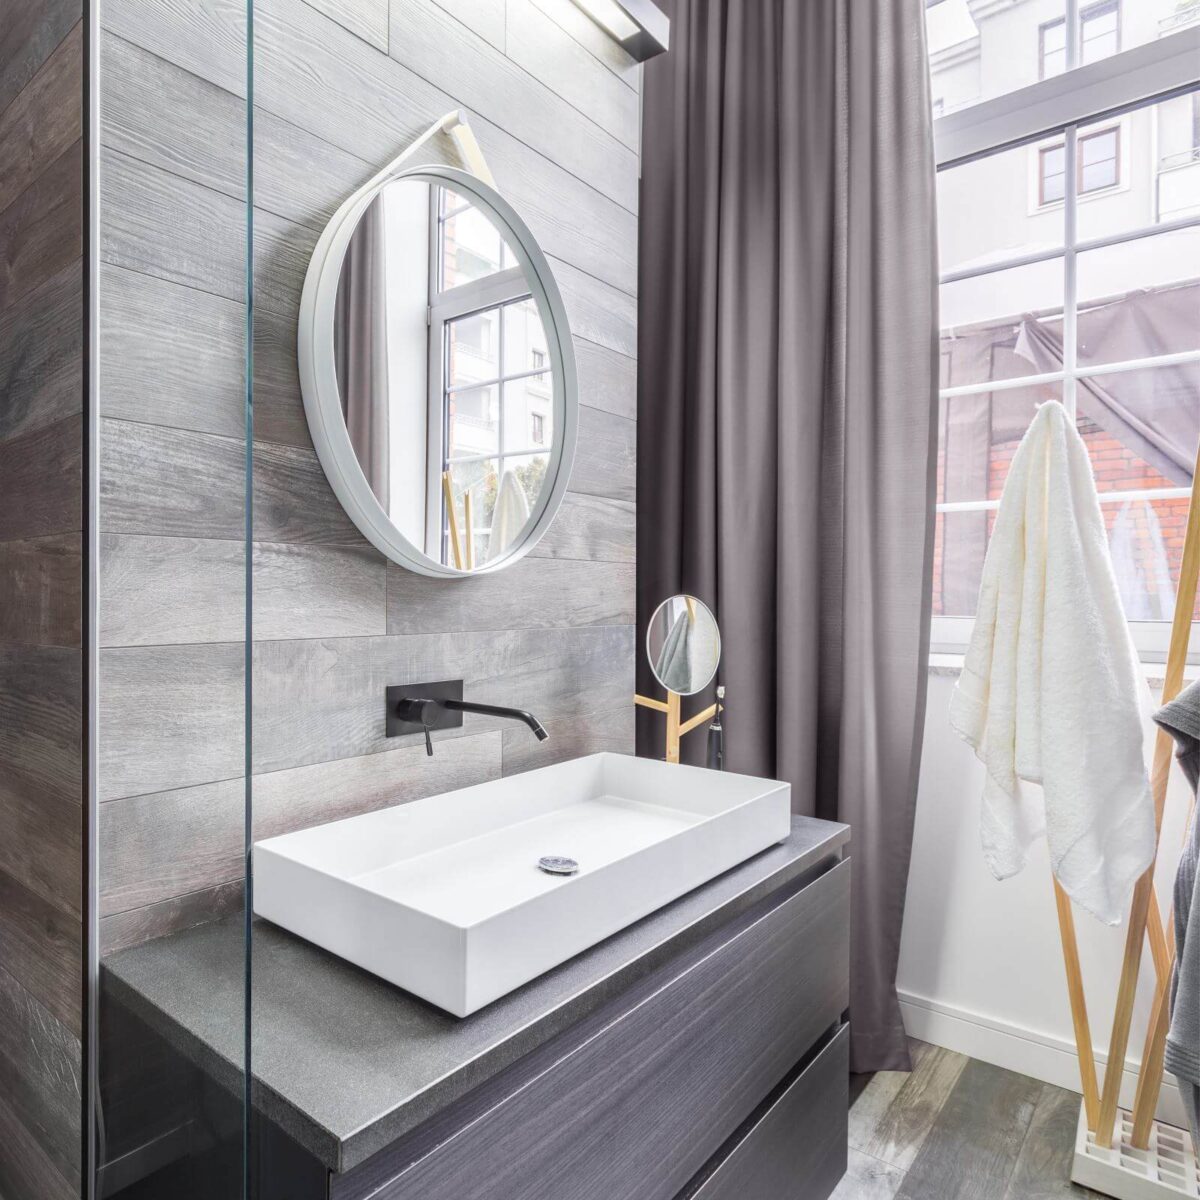 Elegant design bathroom with wooden walls, white basin and round mirror